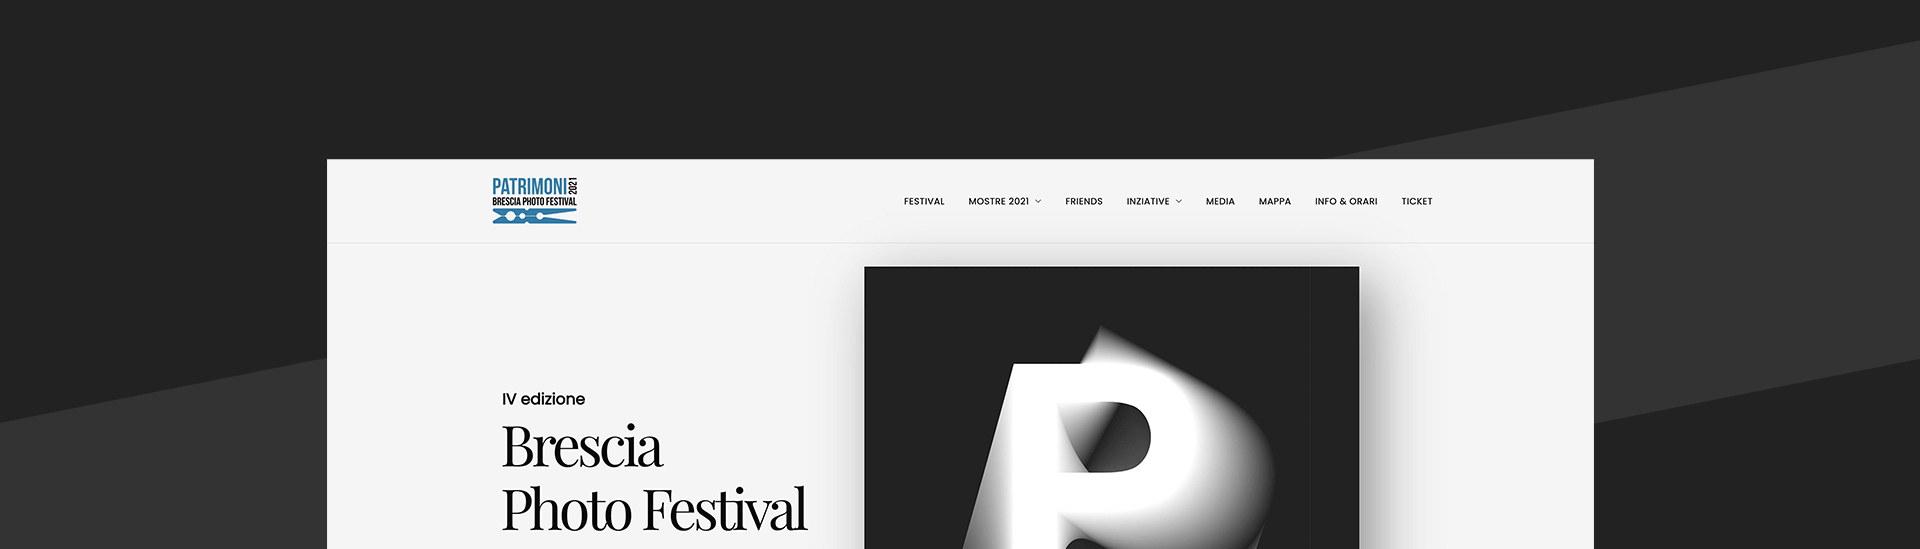 Brescia Photo festival website Uptoart